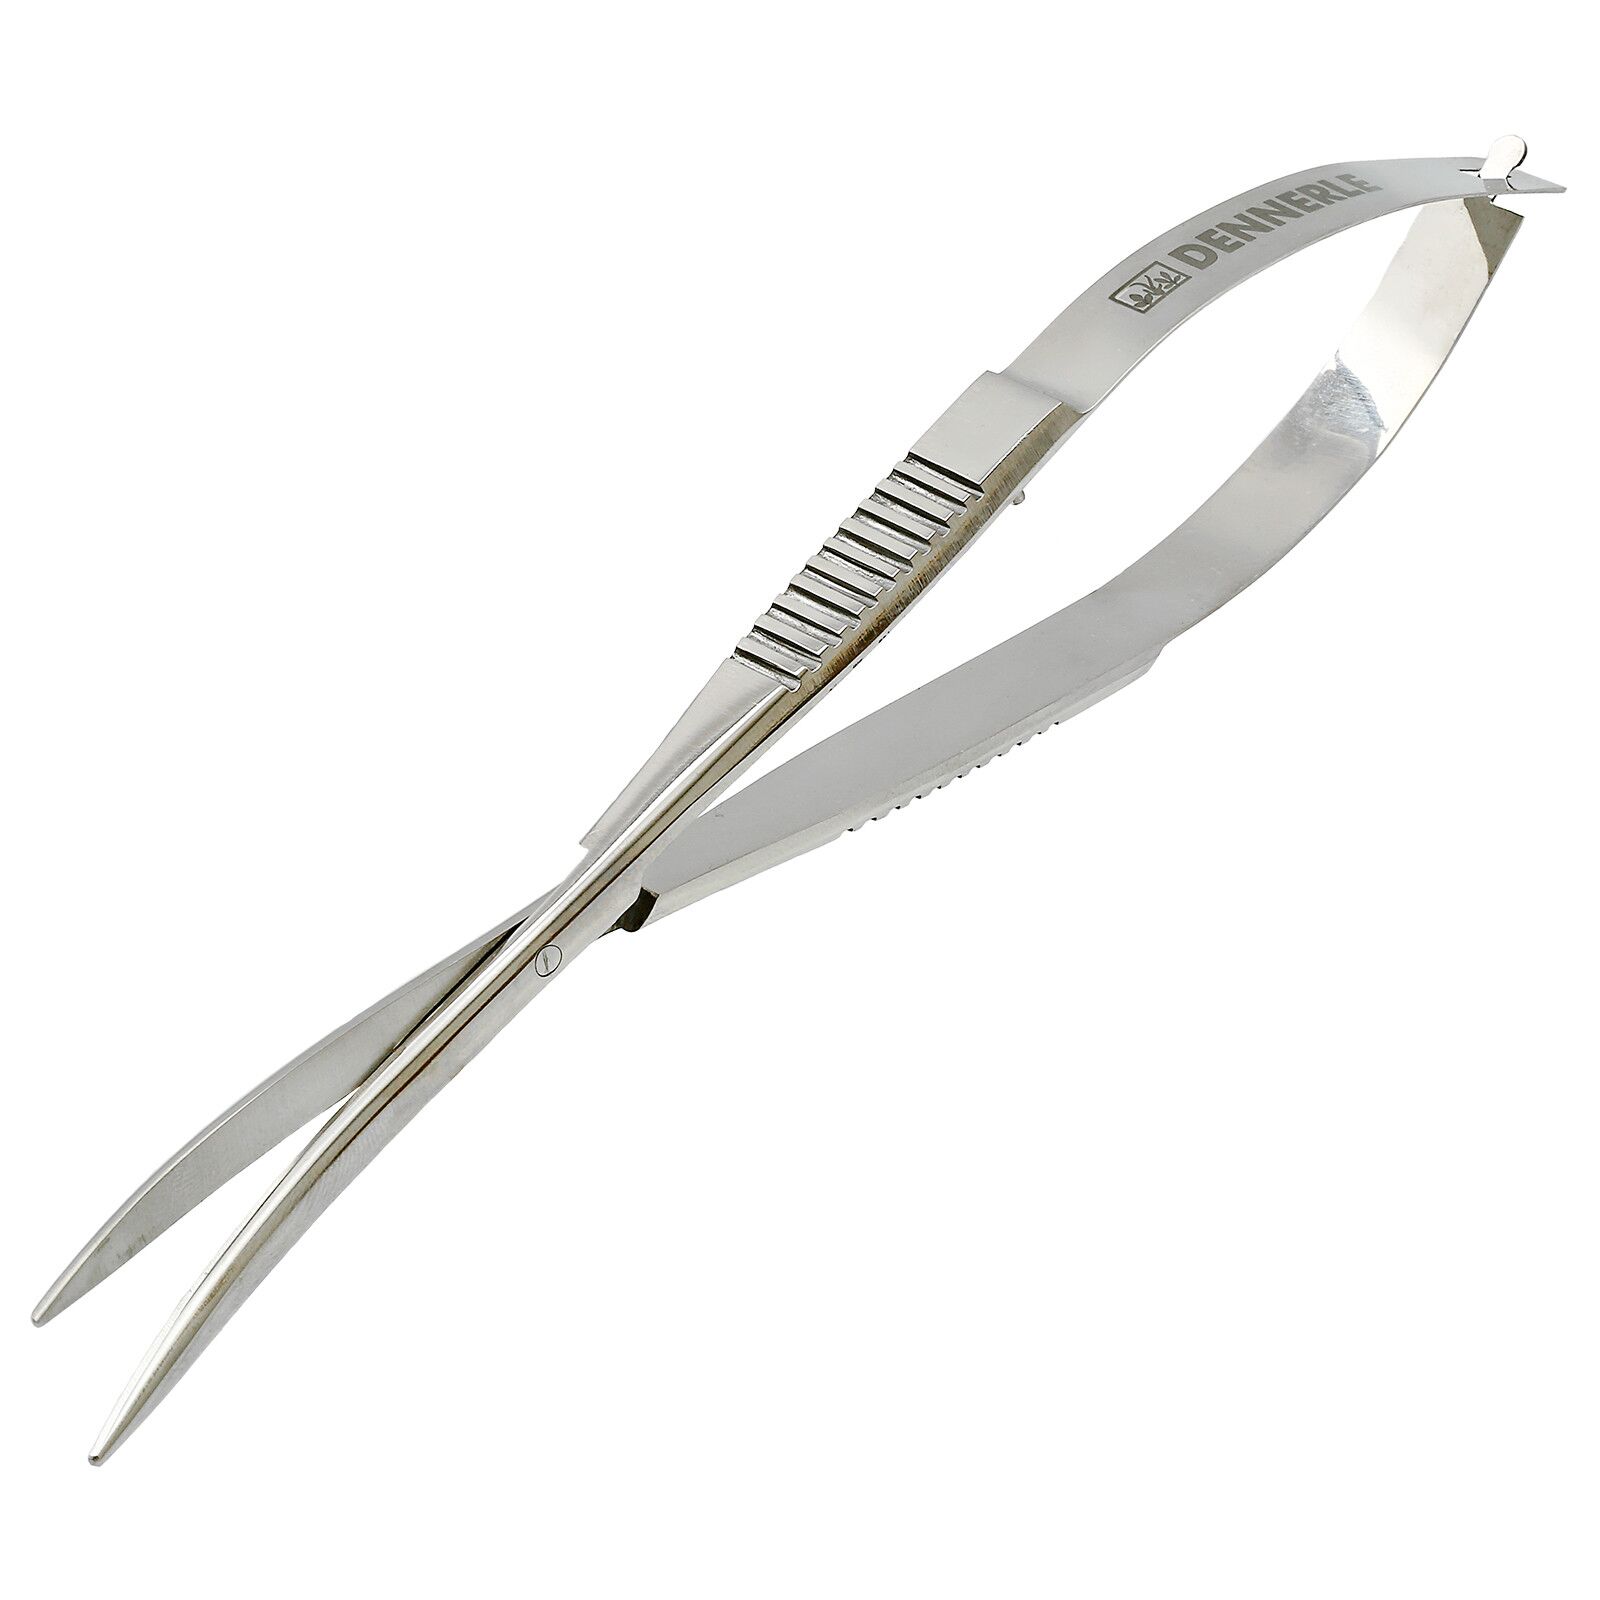 Dennerle - Plant Scissors - Spring - 15 cm